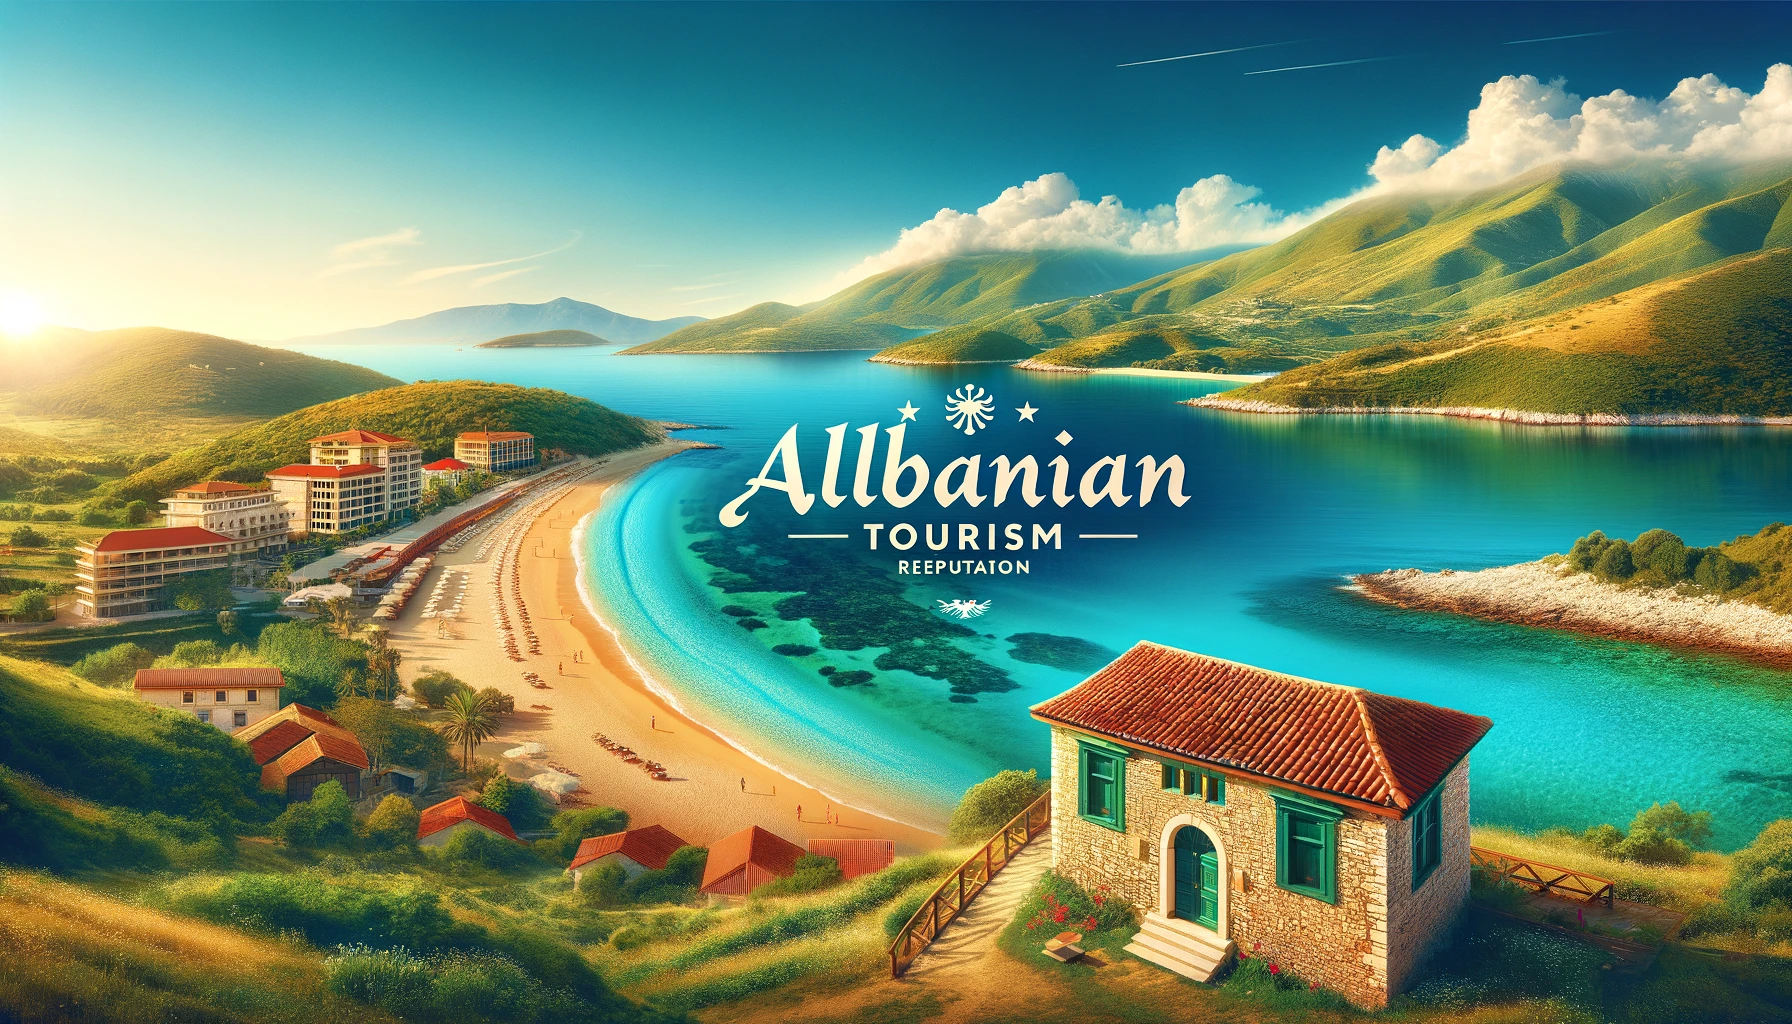 Albanian tourism reputation